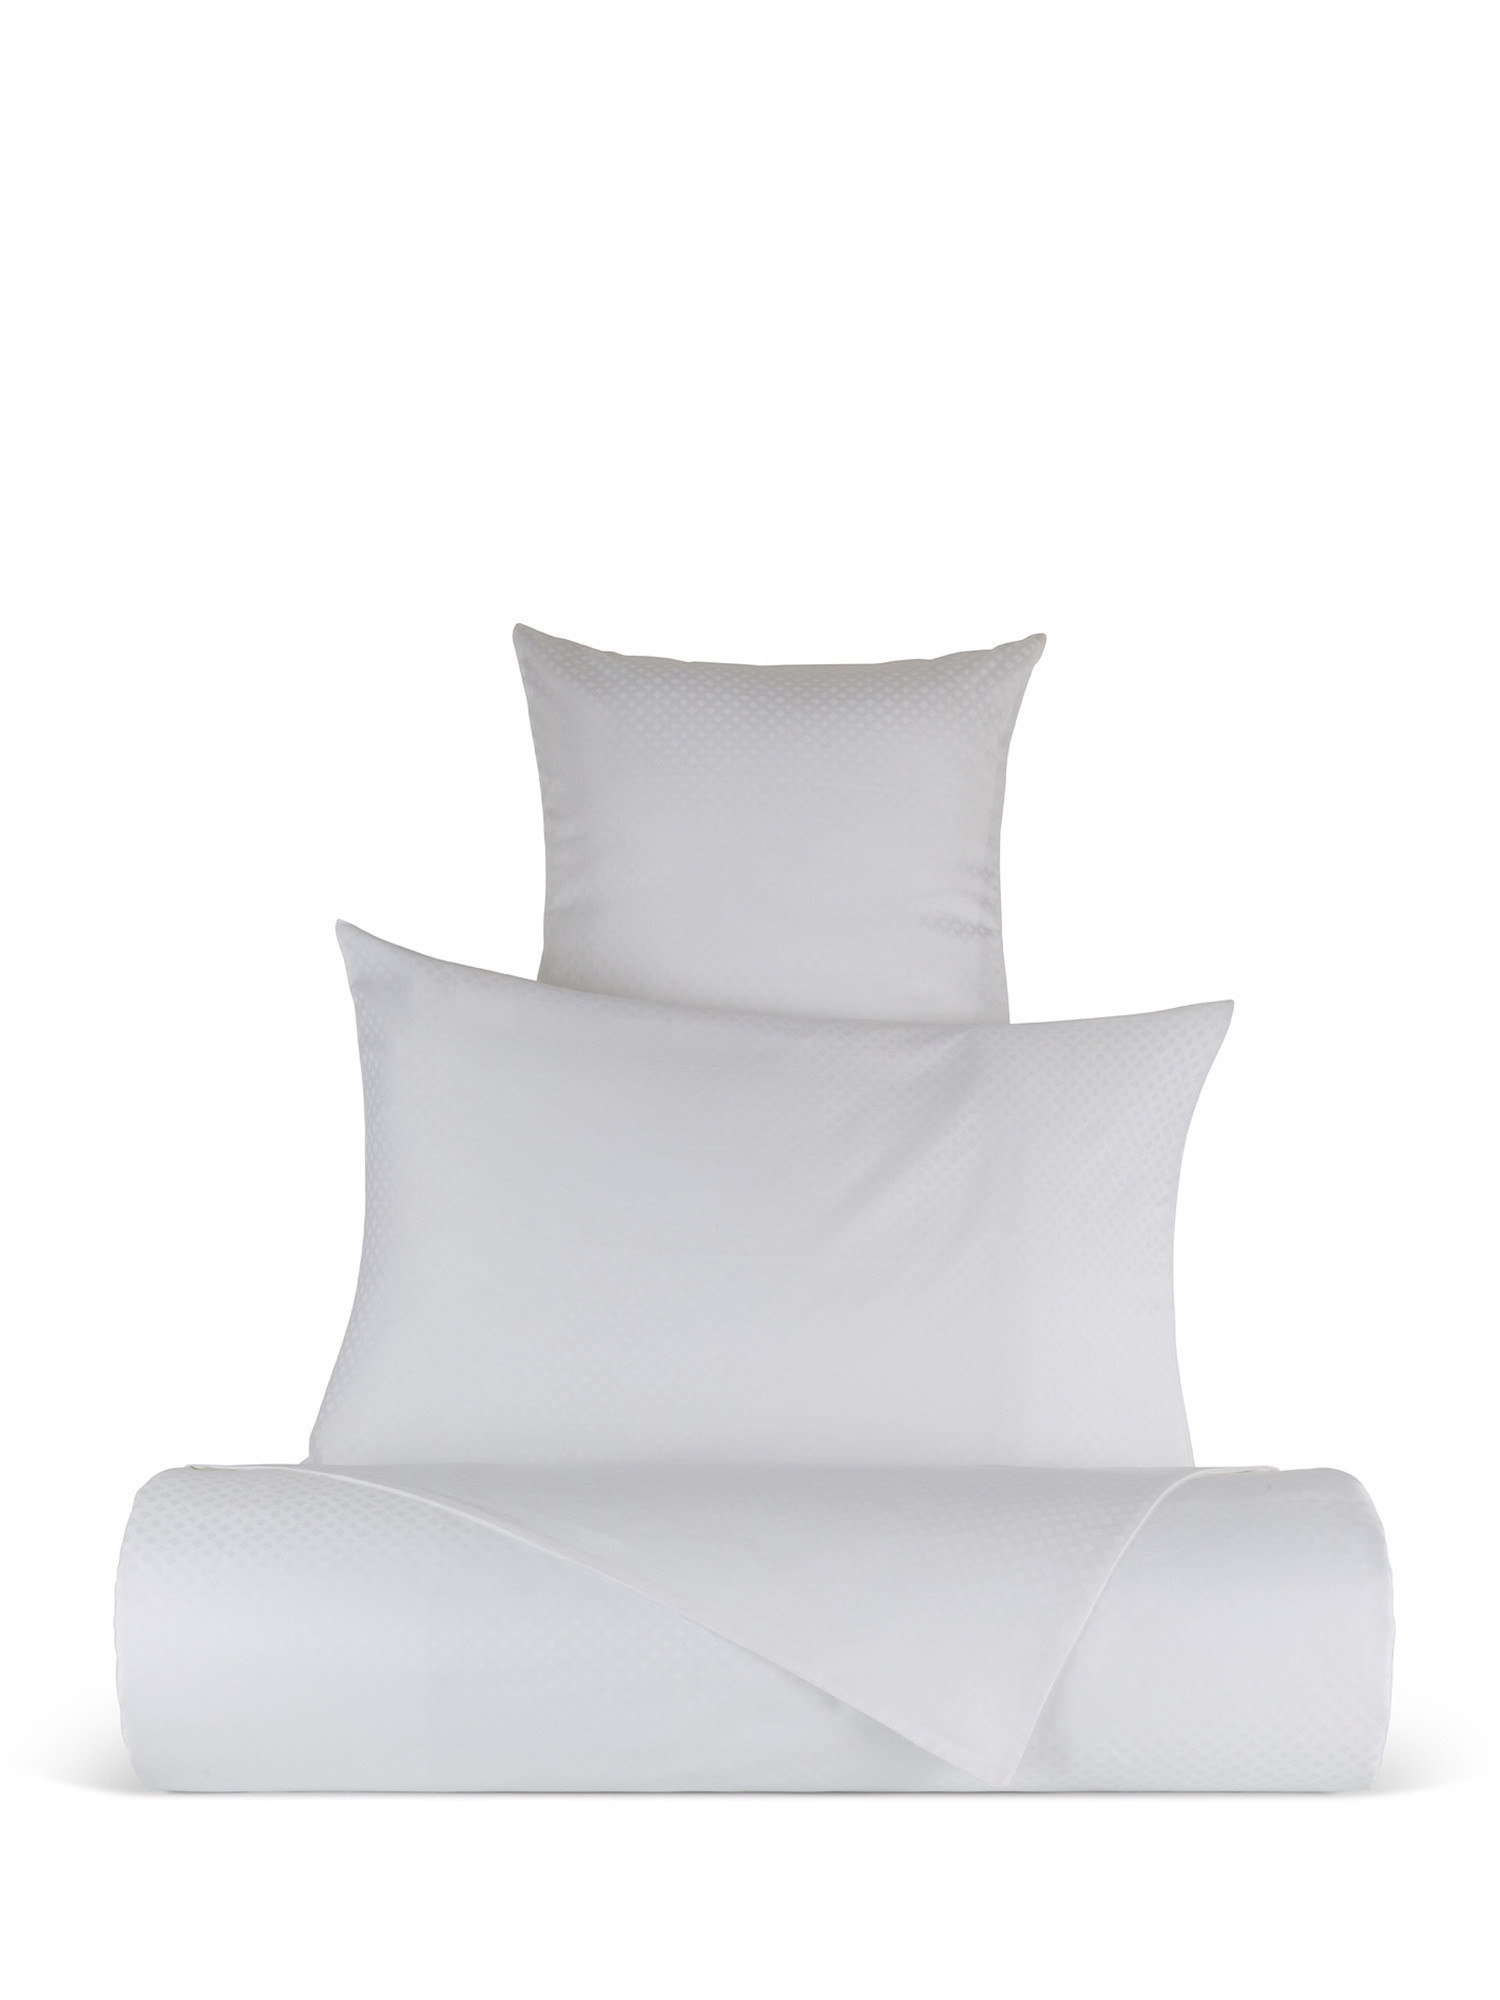 Portofino duvet cover in 100% cotton percale jacquard, White, large image number 0